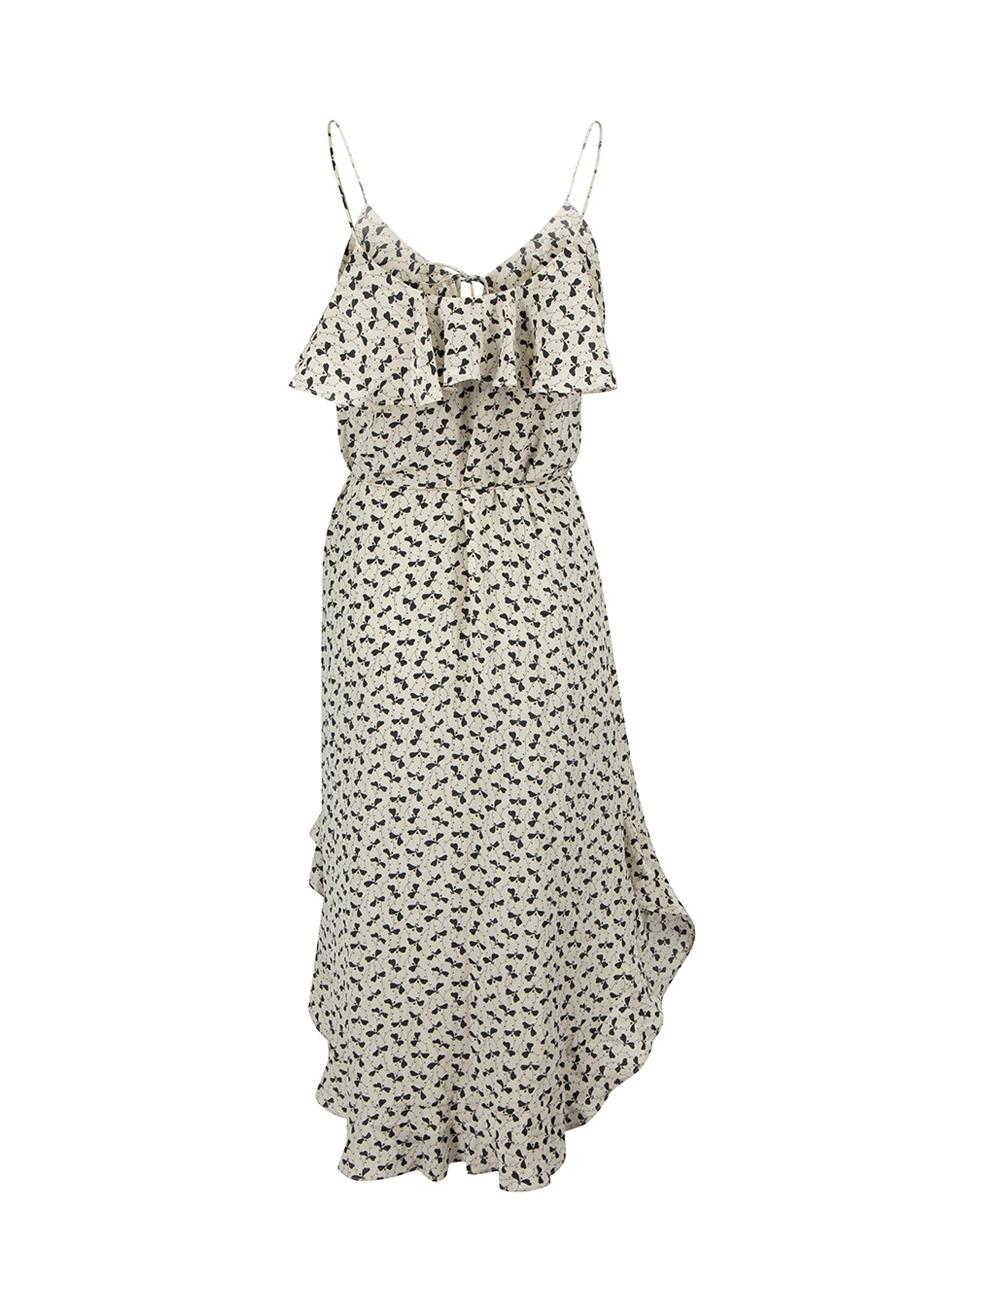 Gray Zimmermann Abstract Print Ruffle Sleeveless Dress Size M